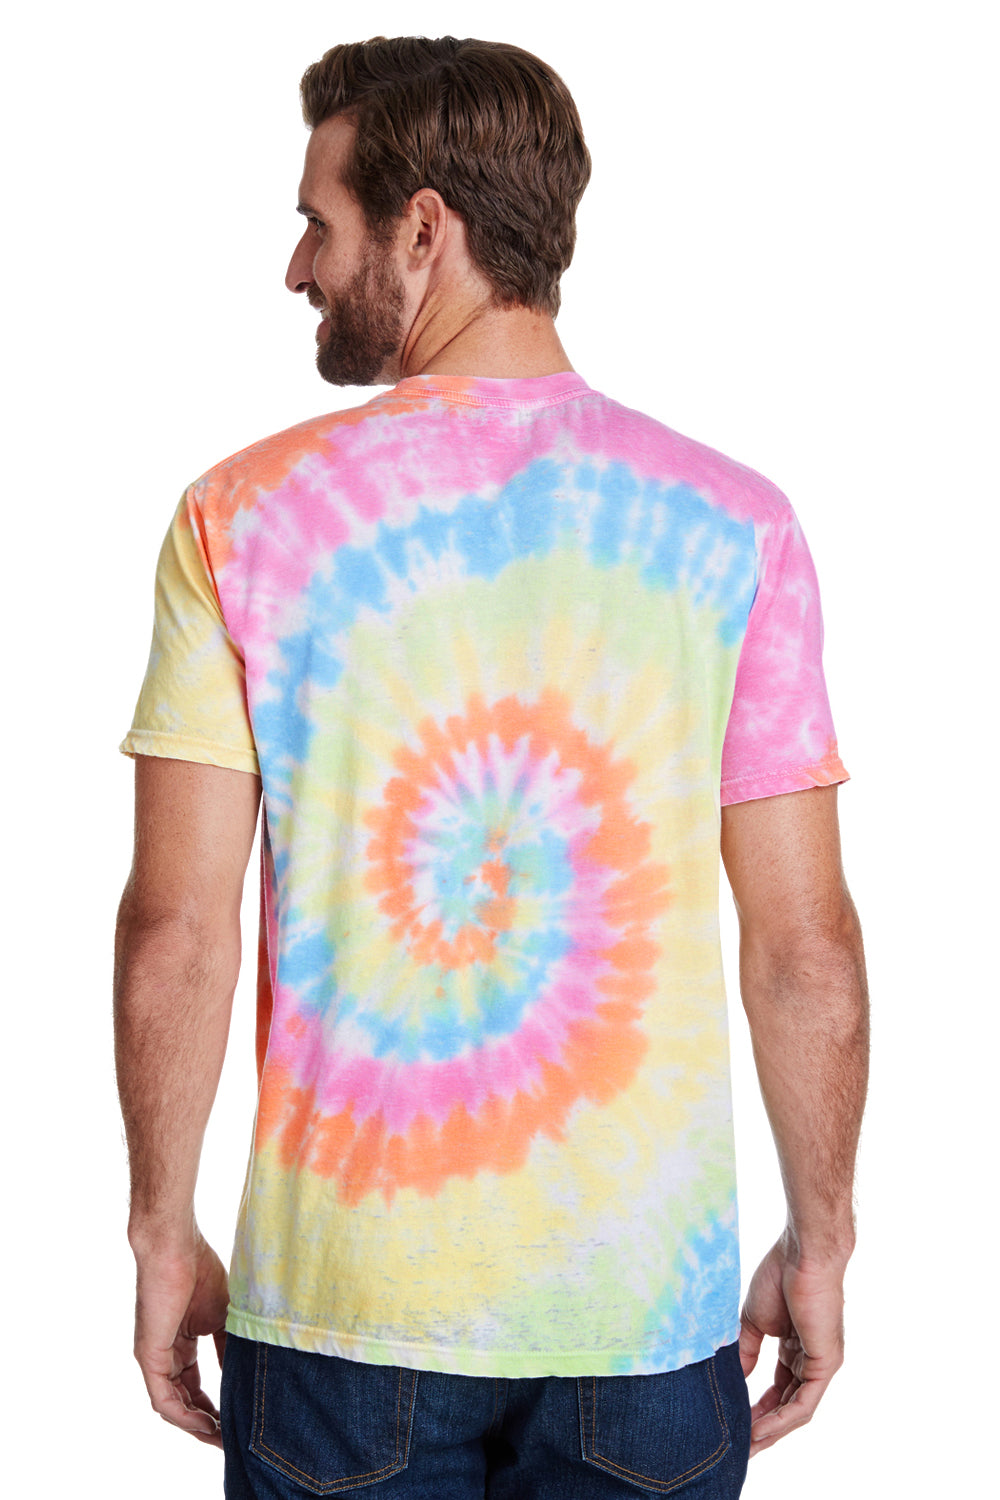 Tie-Dye CD1090 Mens Burnout Festival Short Sleeve Crewneck T-Shirt Pastel Back